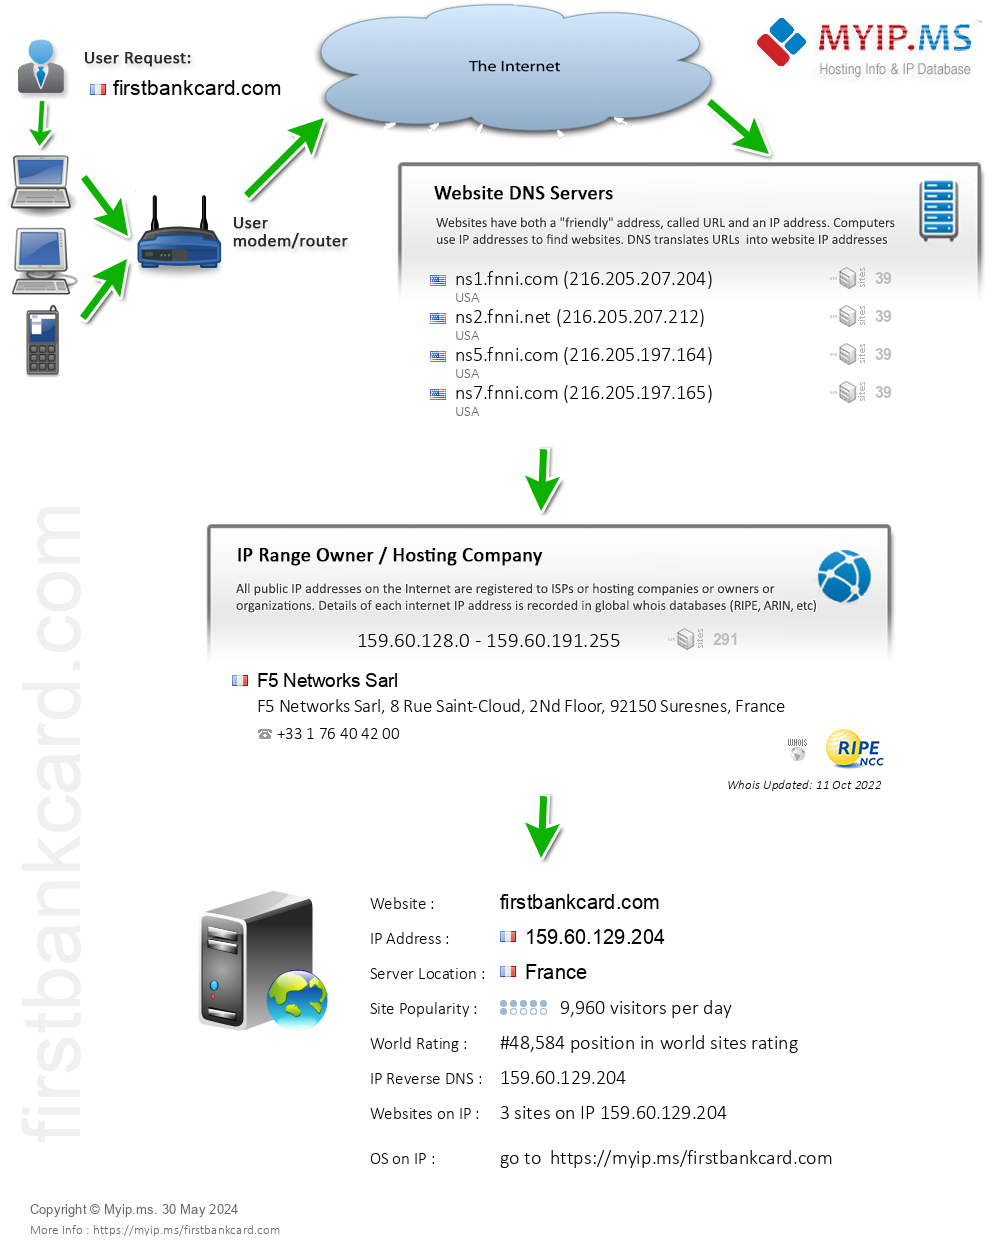 Firstbankcard.com - Website Hosting Visual IP Diagram